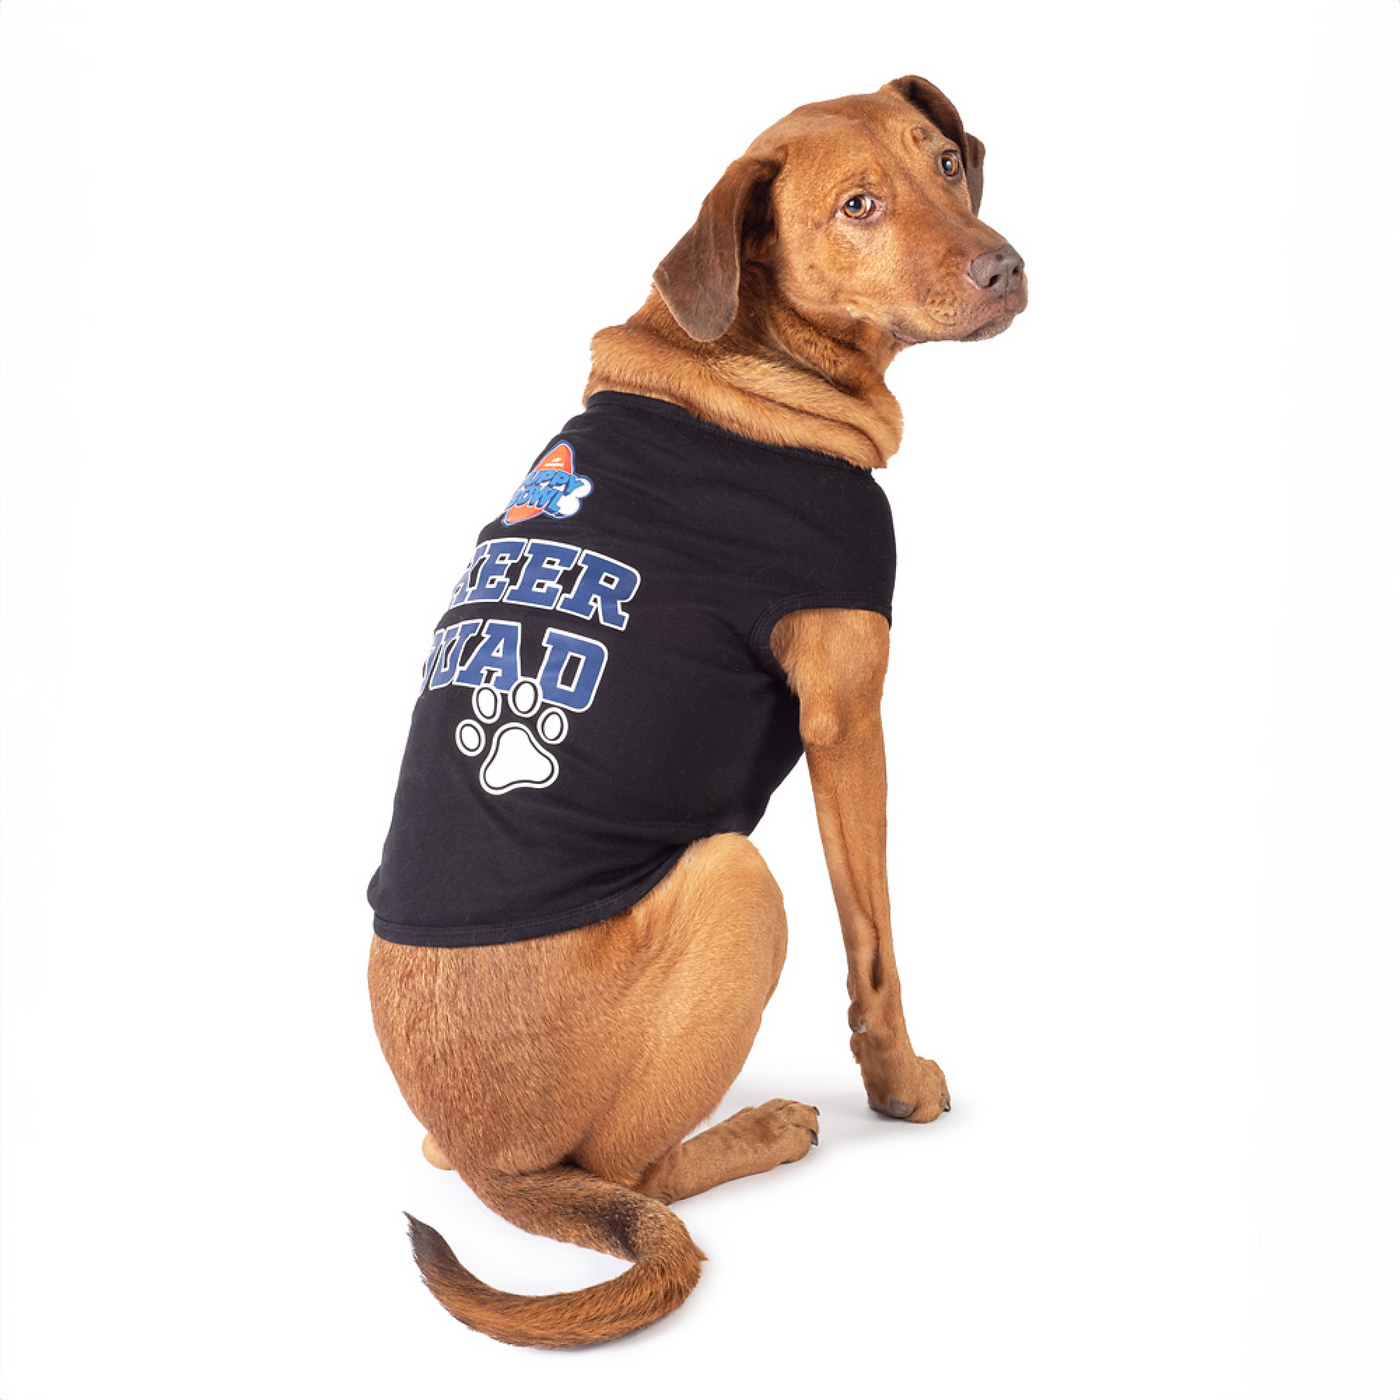 Animal Planet’s Puppy Bowl Cheer Squad Dog Shirt